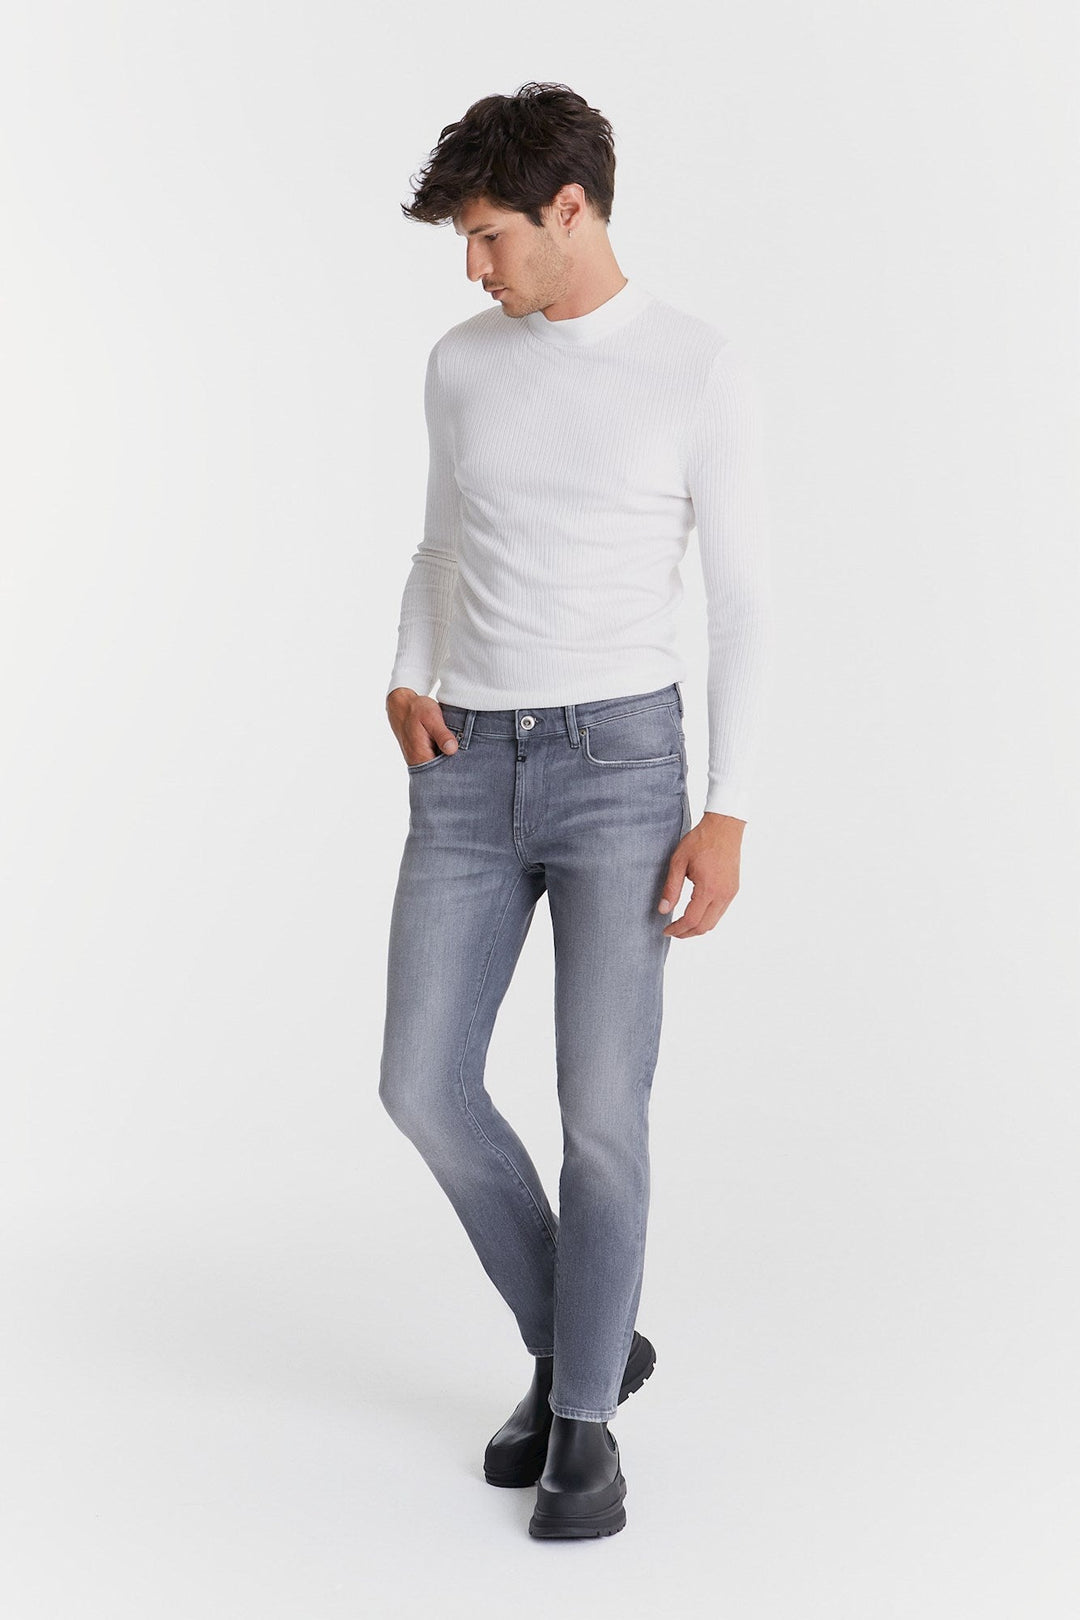 RAY Jeans Tapered Fit slate grey COJ kaufen I Unikat Store Karlsruhe